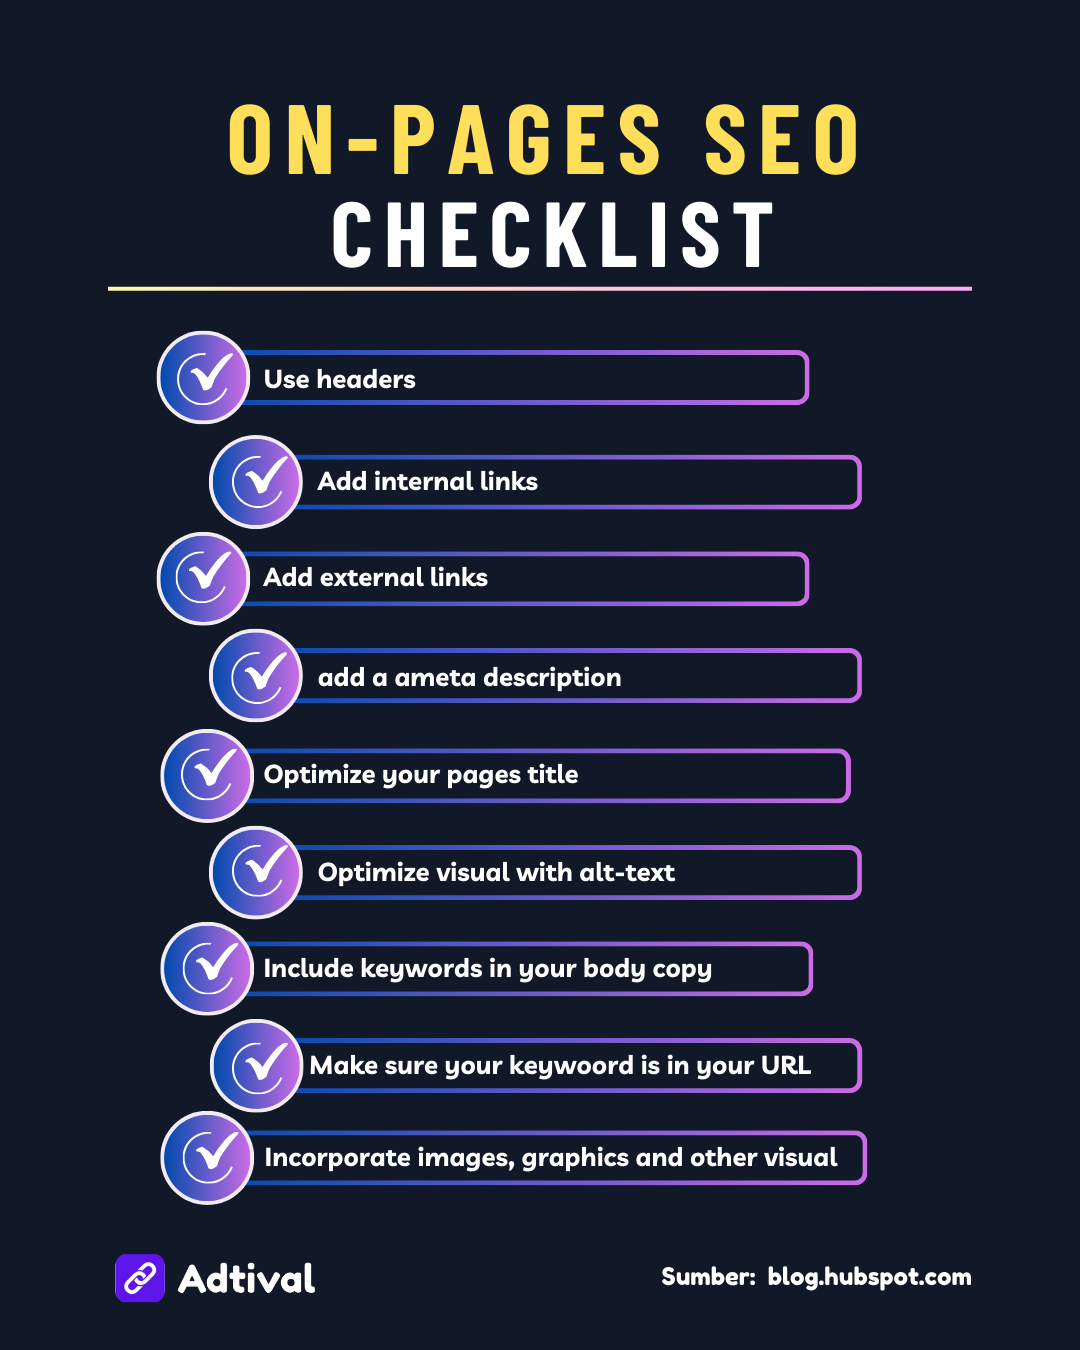 On-Page SEO Checklist